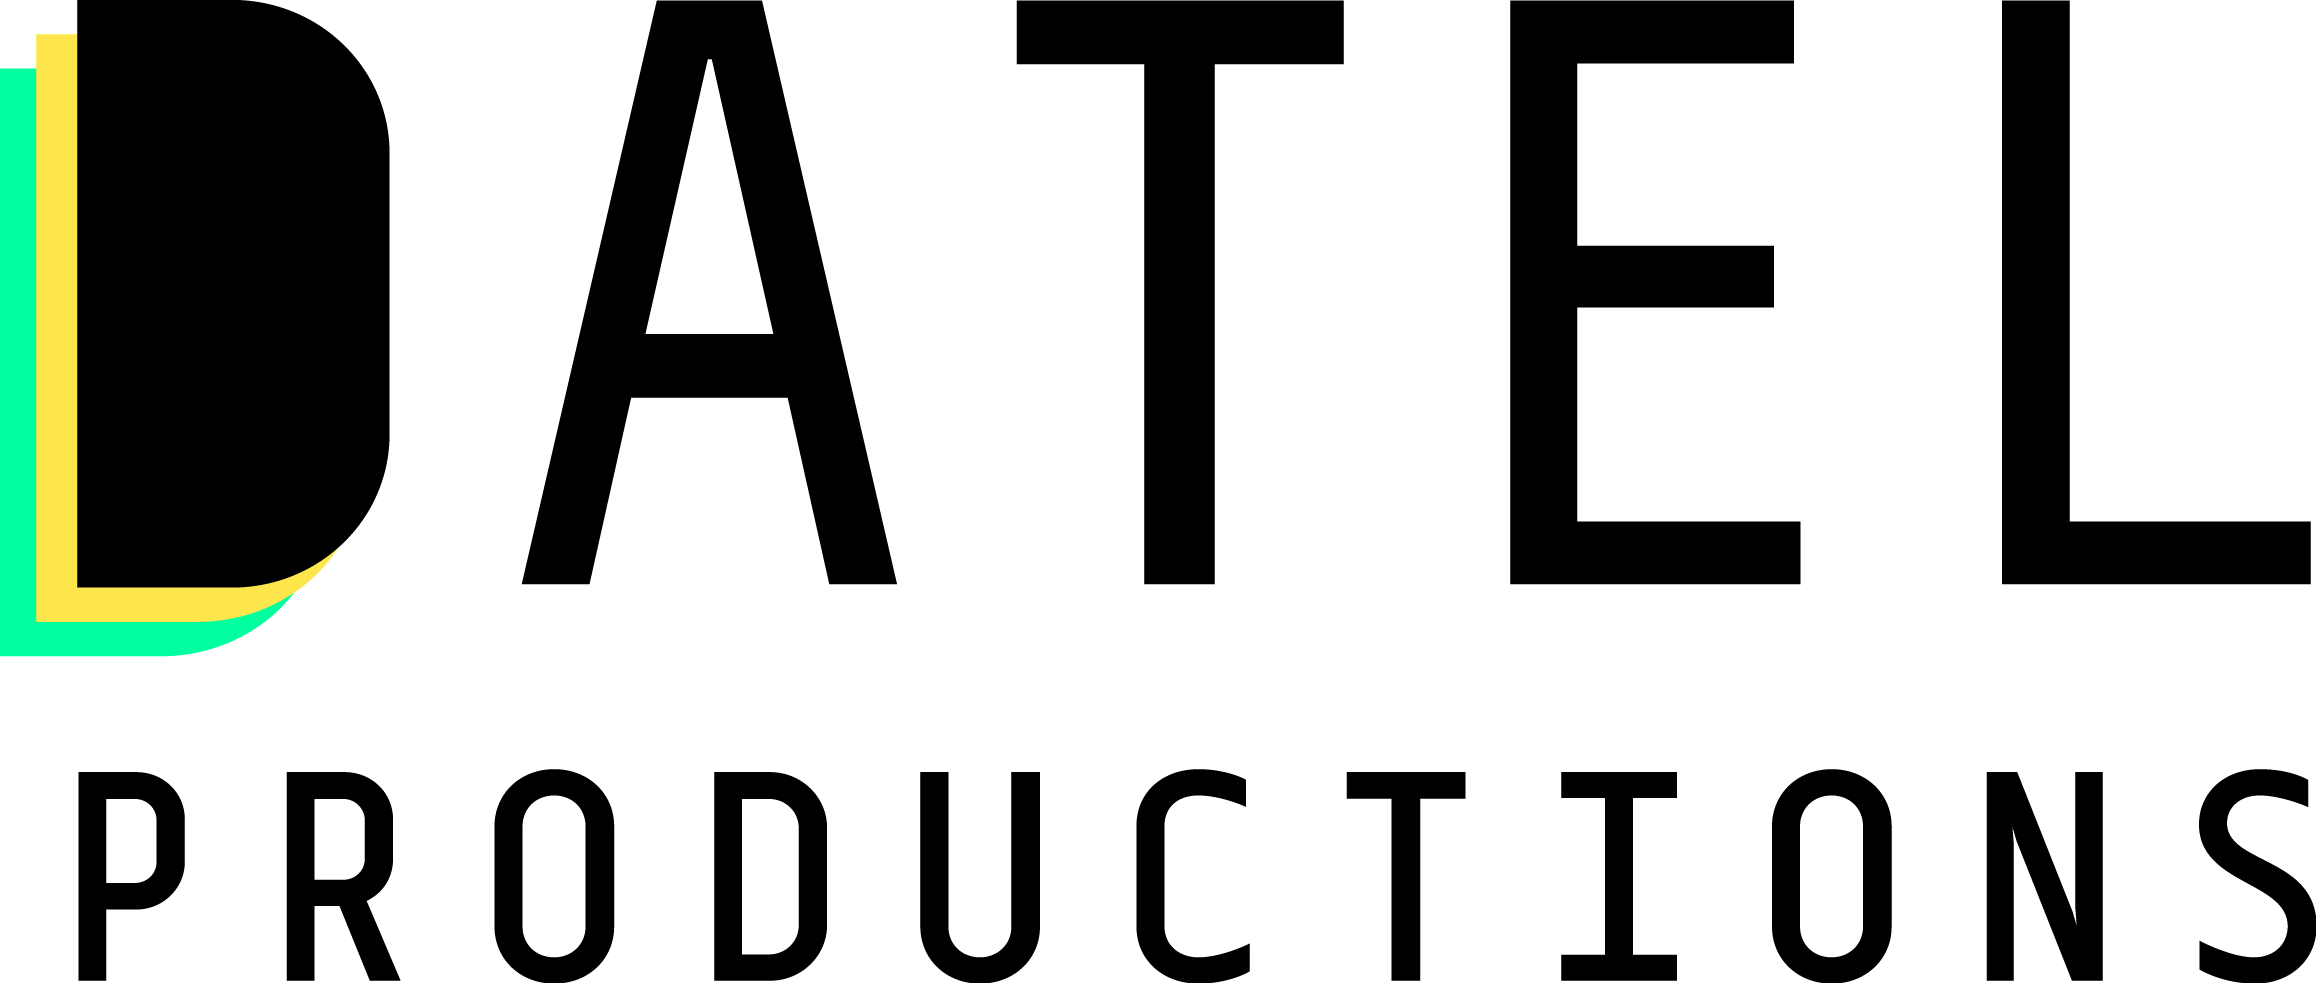 Datel productions logo